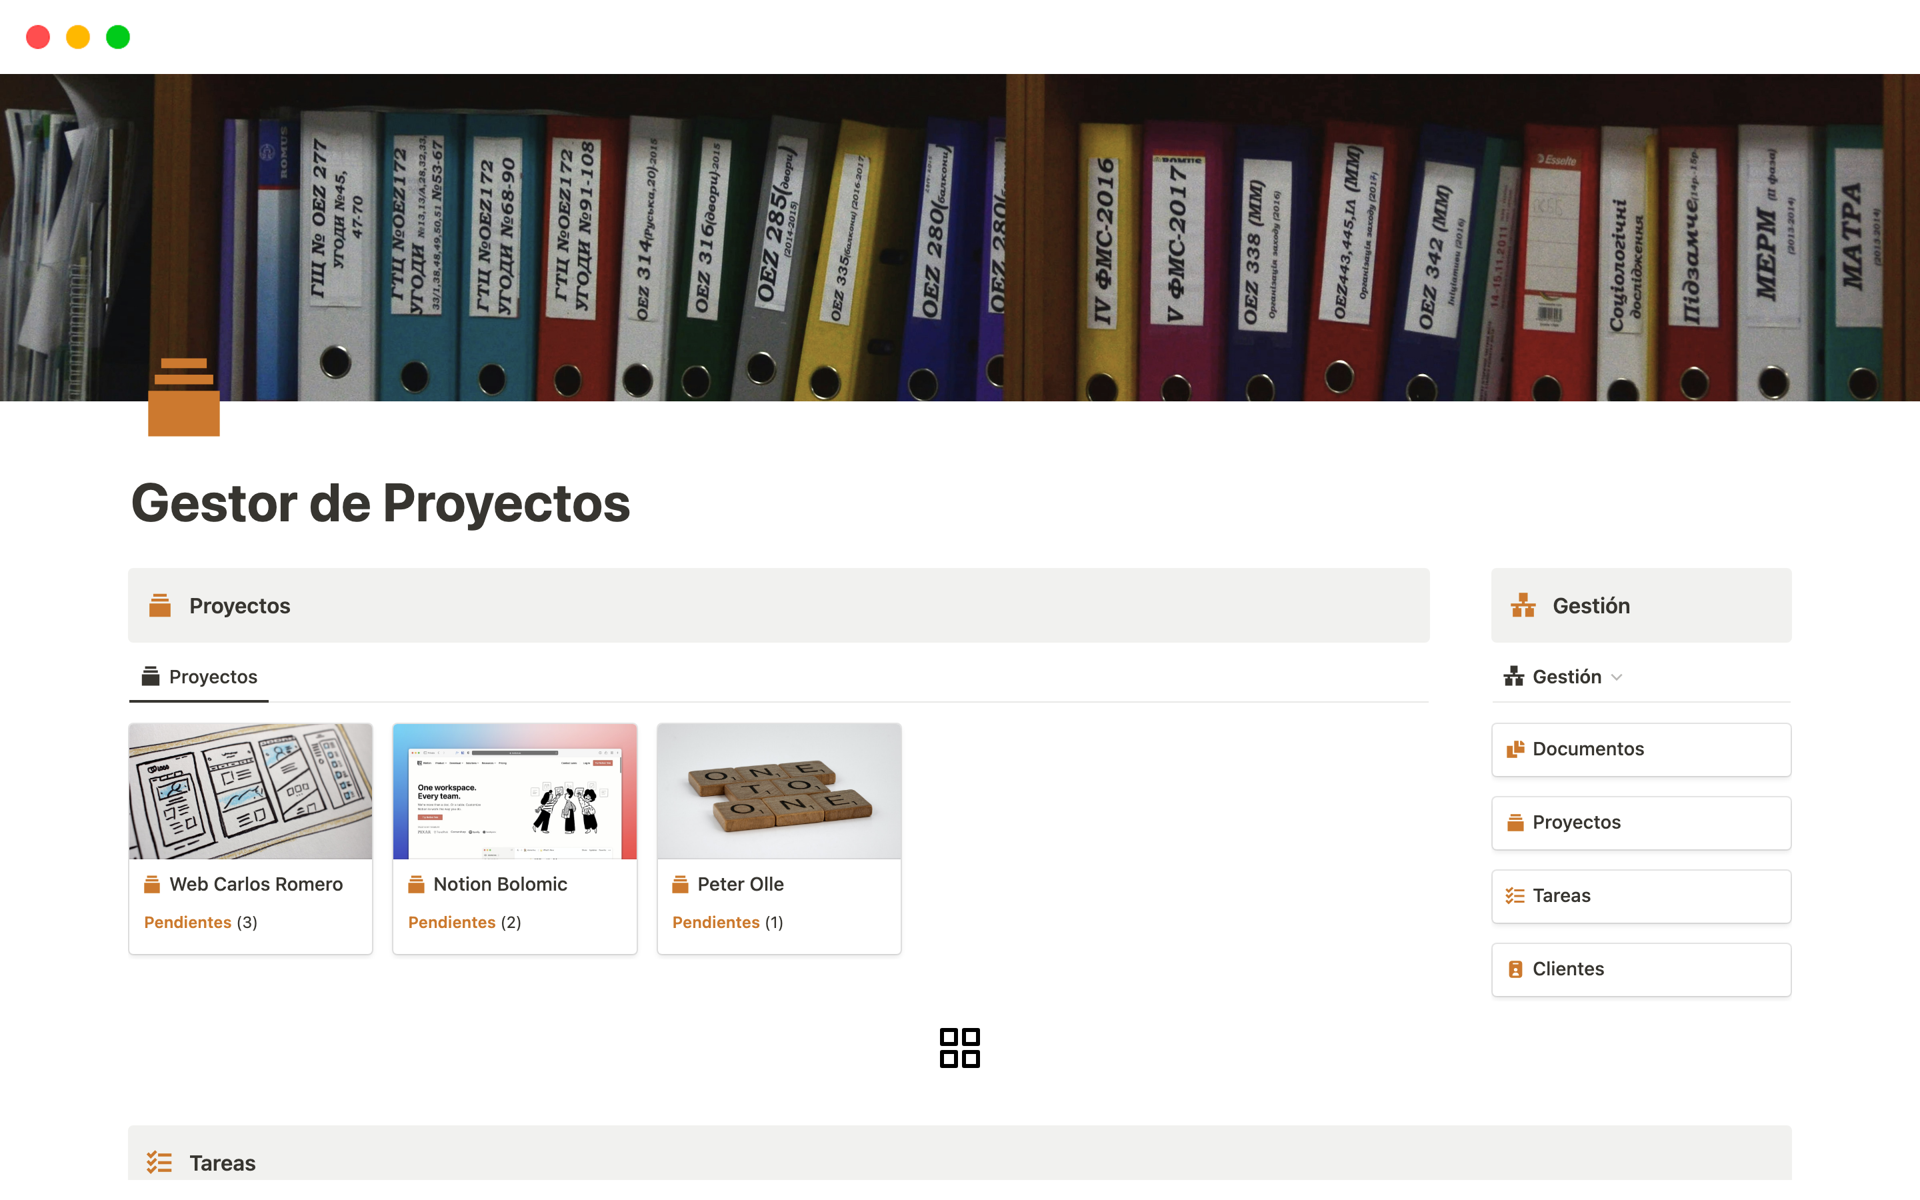 En förhandsgranskning av mallen för Gestor de Proyectos, Tareas, Documentos y Clientes